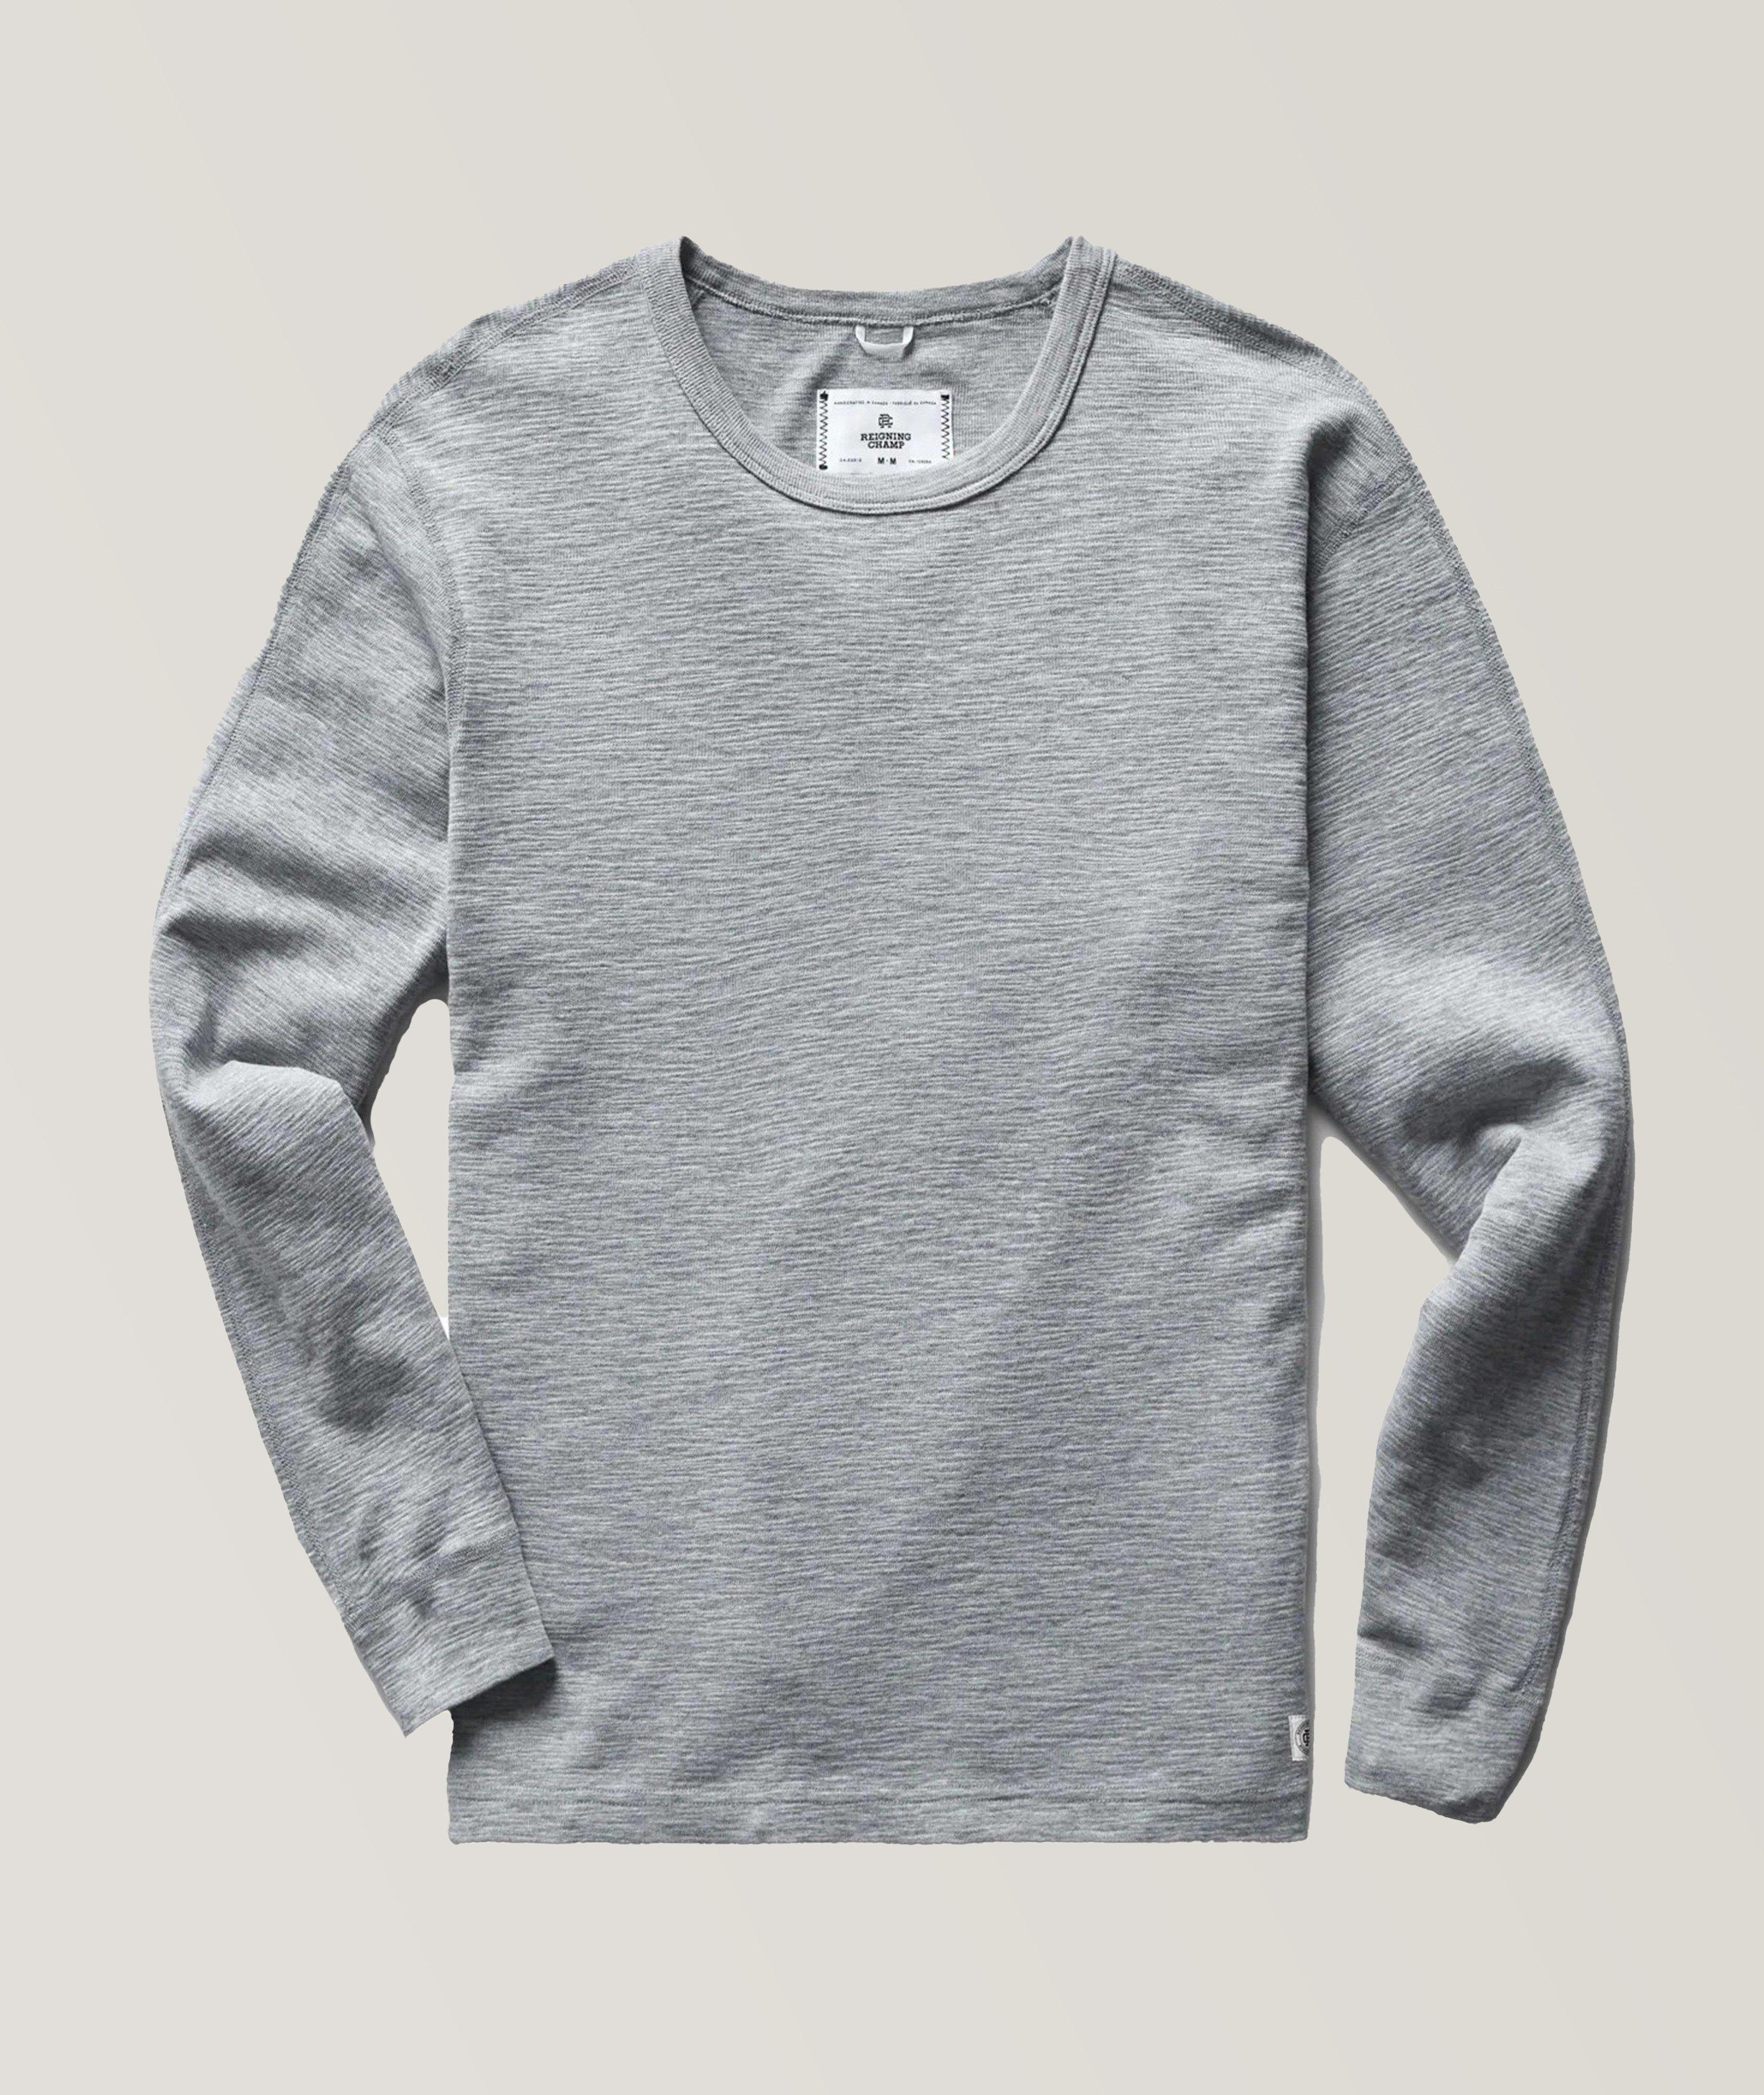 Long-Sleeve Slub Cotton T-Shirt image 0